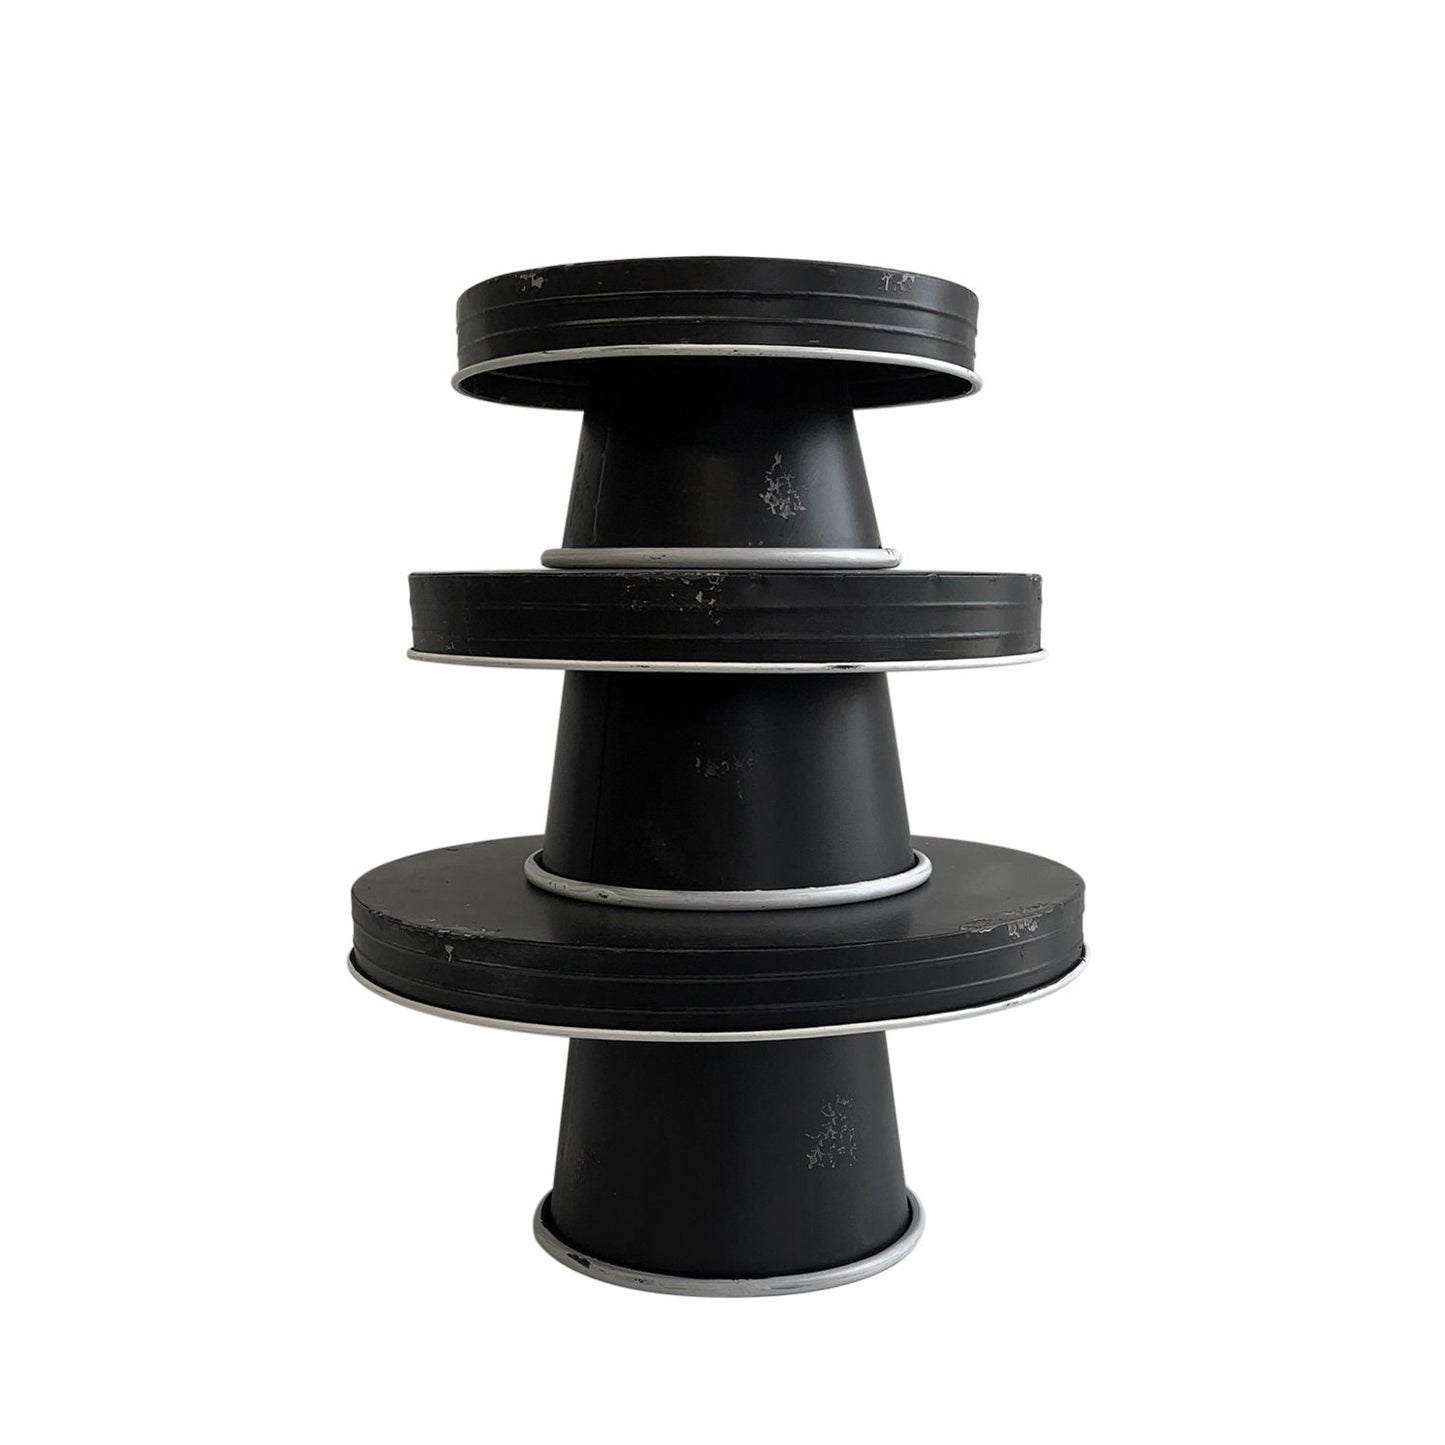 Black Distressed Enamel Pedestal Server Set - 3 Piece Farmhouse Decor